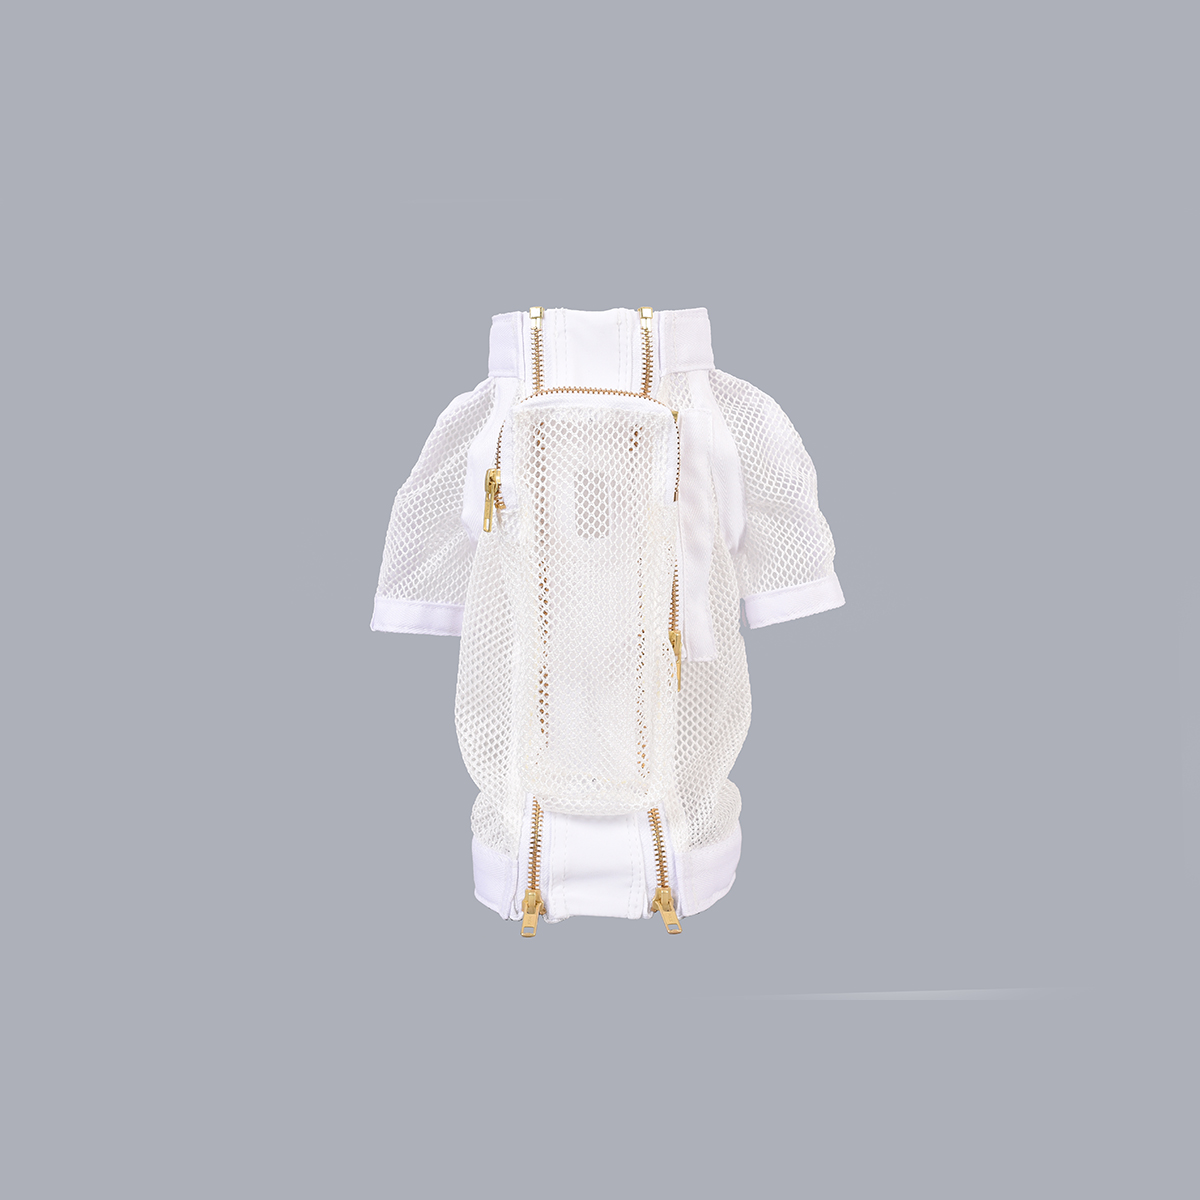 Primate Jacket, Rear View, with Custom Pocket For emkaPack (PJ 02PM)